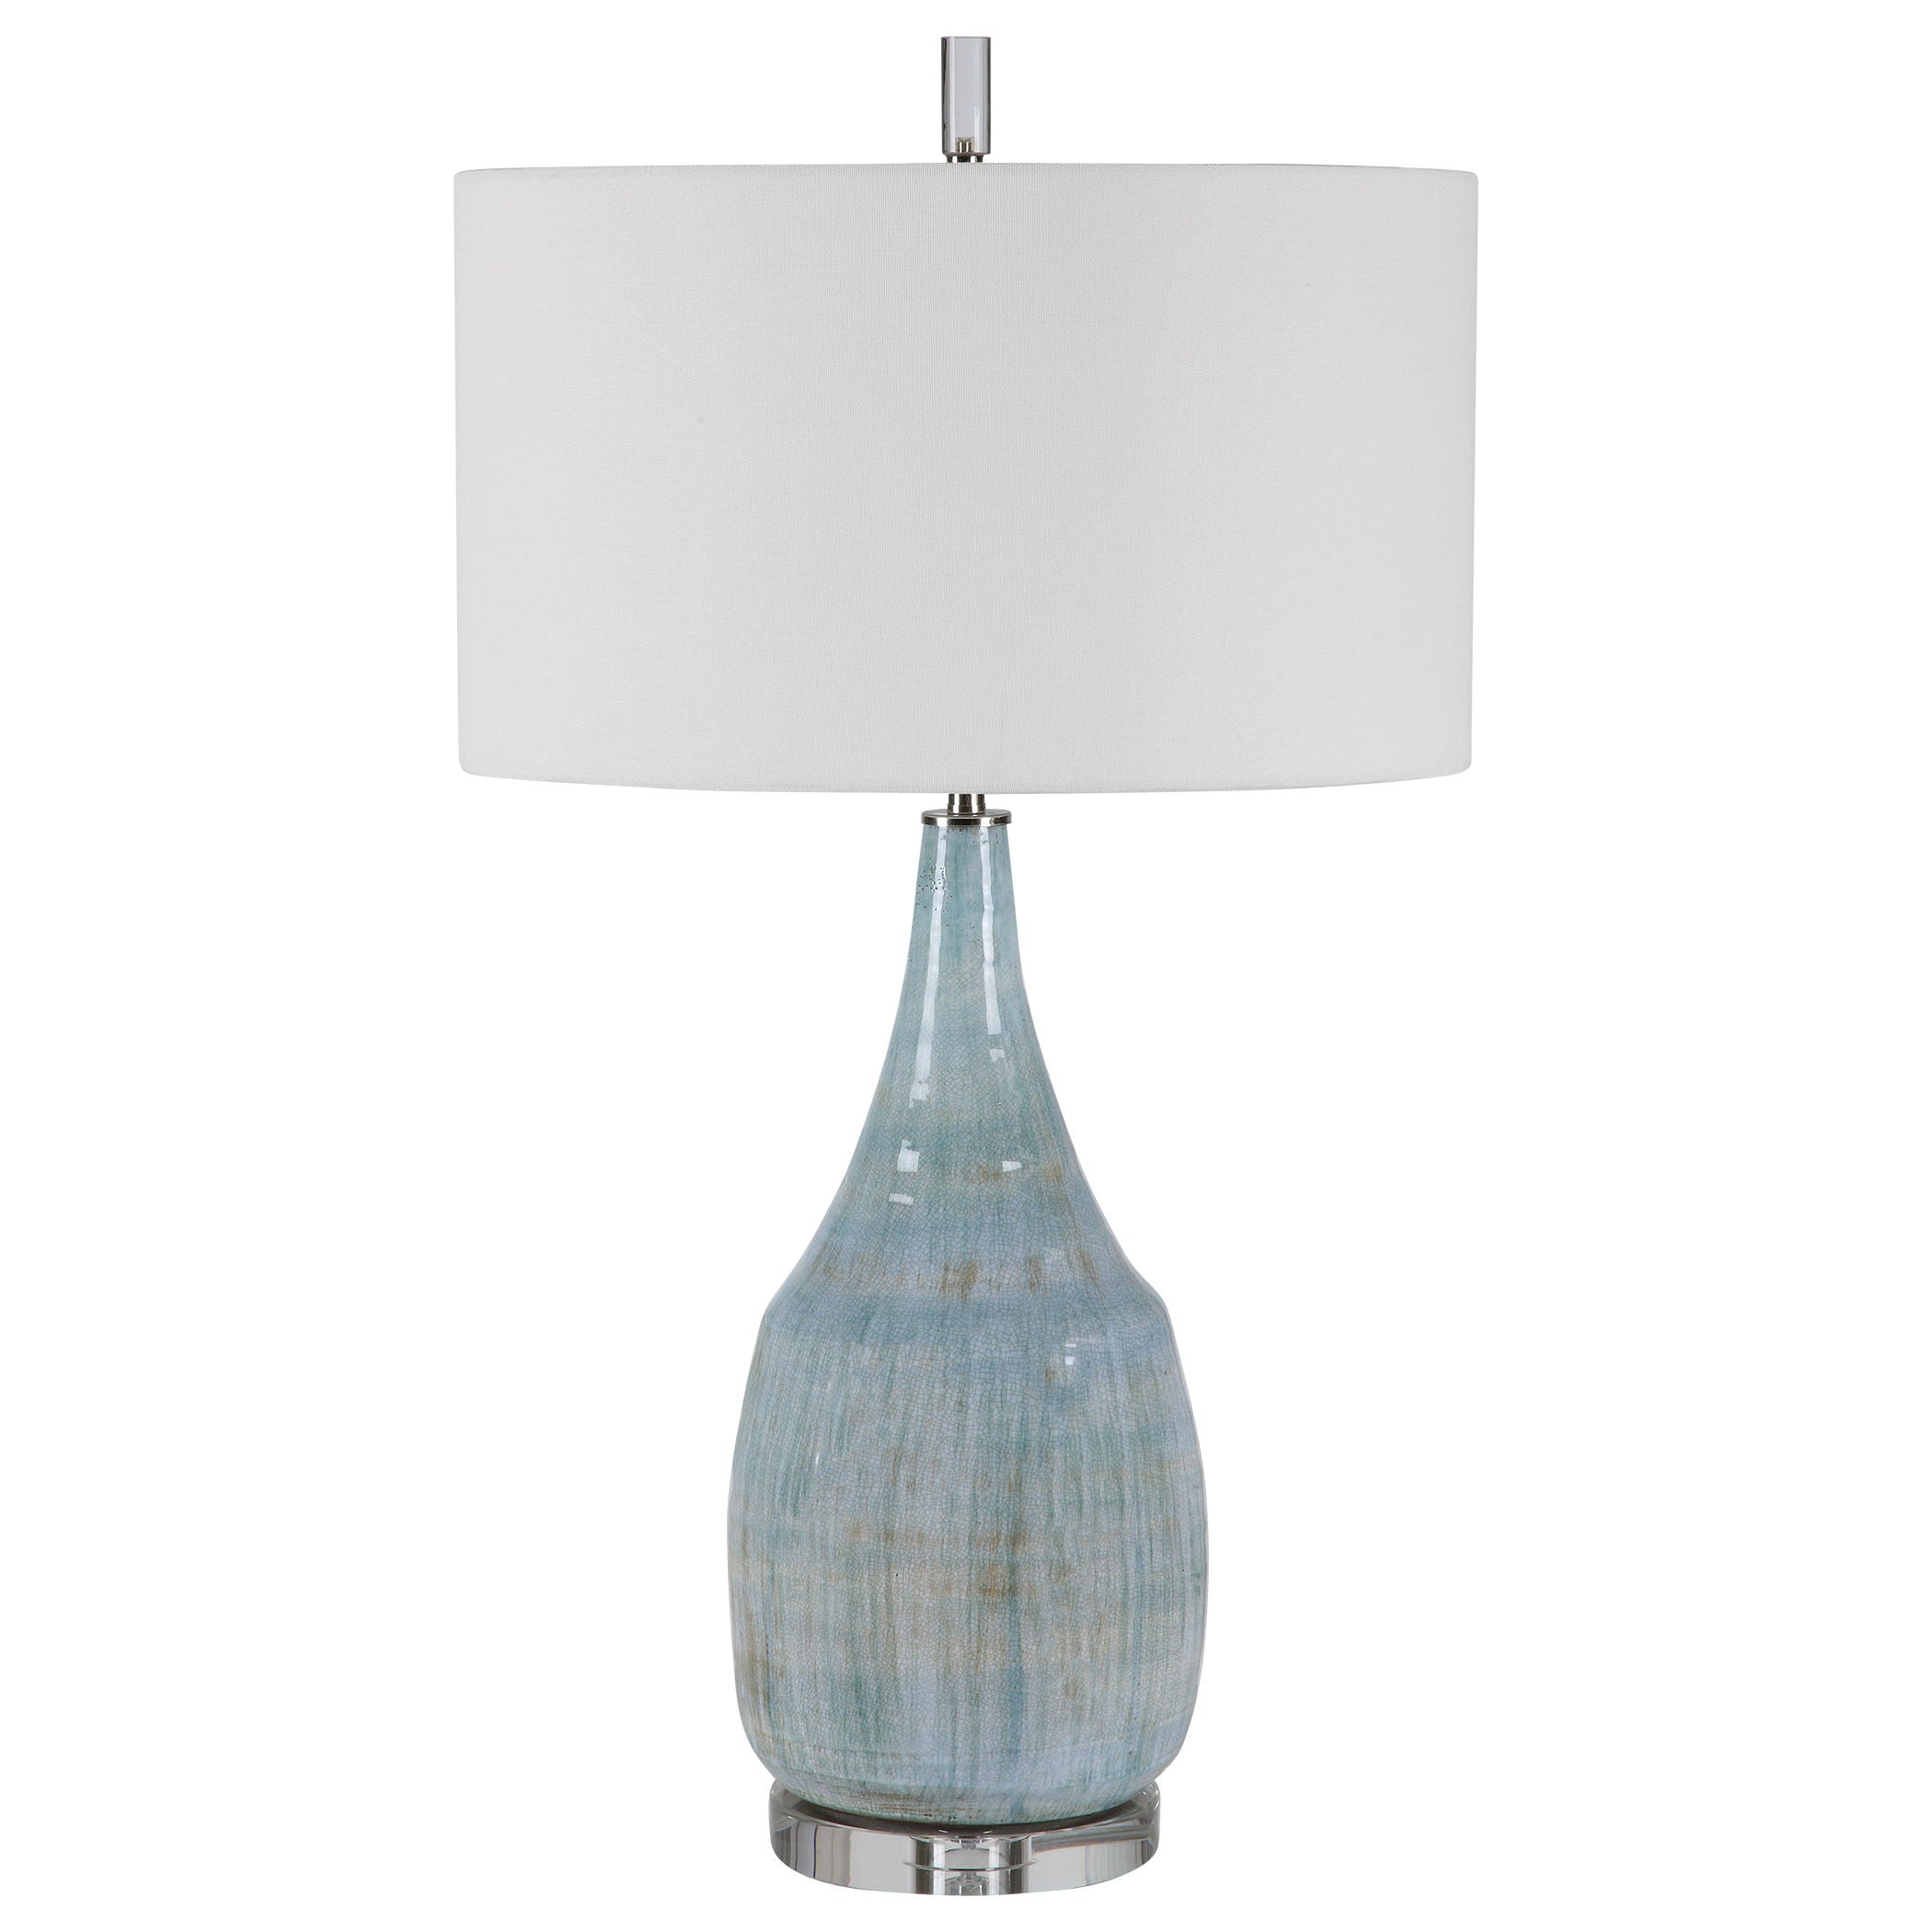 Rialta - Coastal Table Lamp - Blue, Light